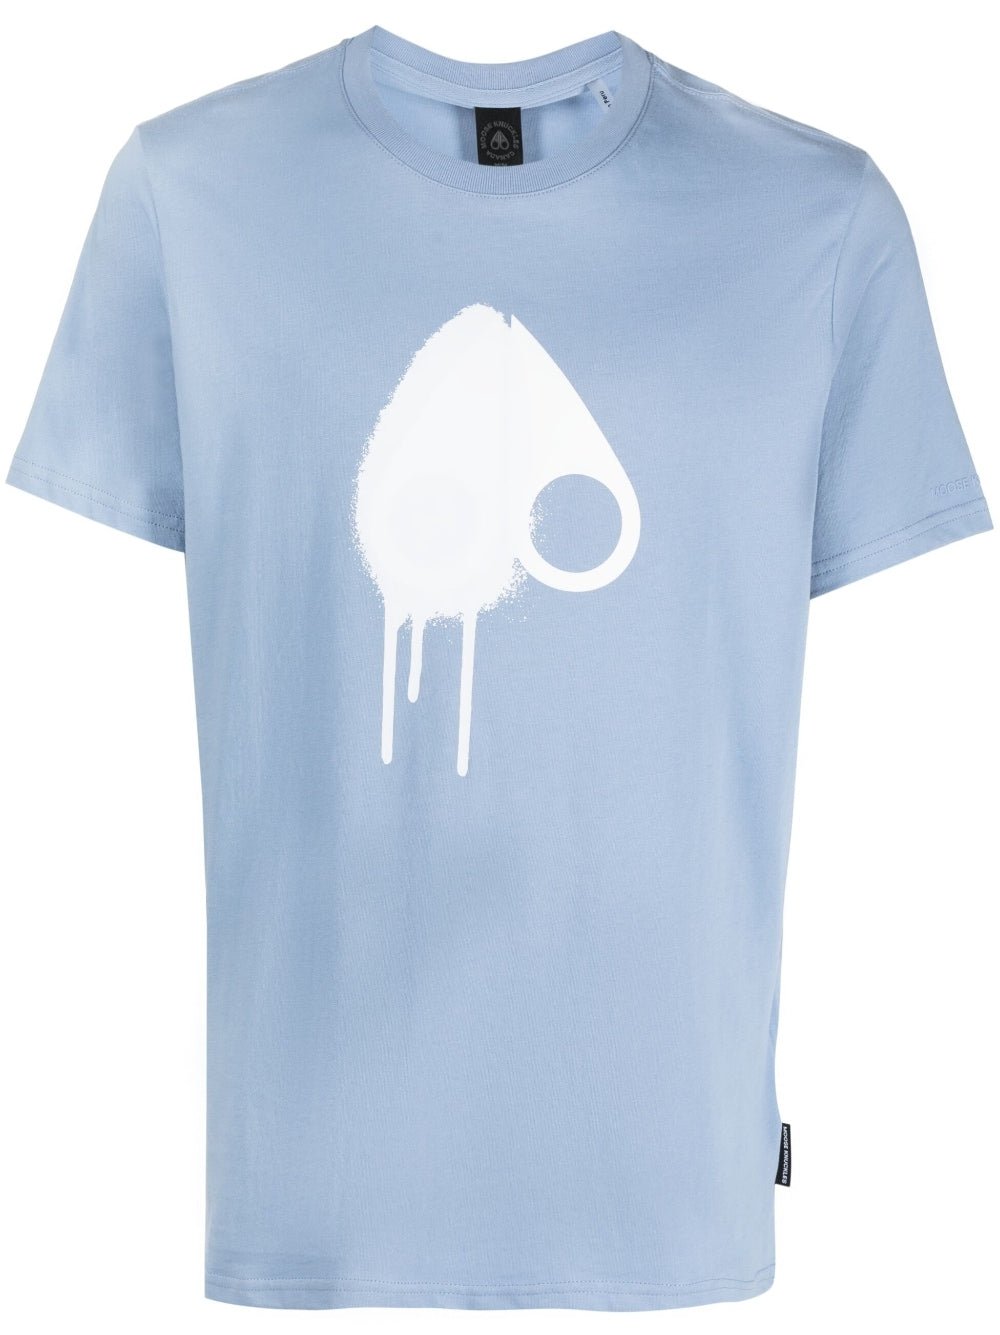 Moose Knuckles Augustine T-Shirt - 1100 Wind Blue - Escape Menswear